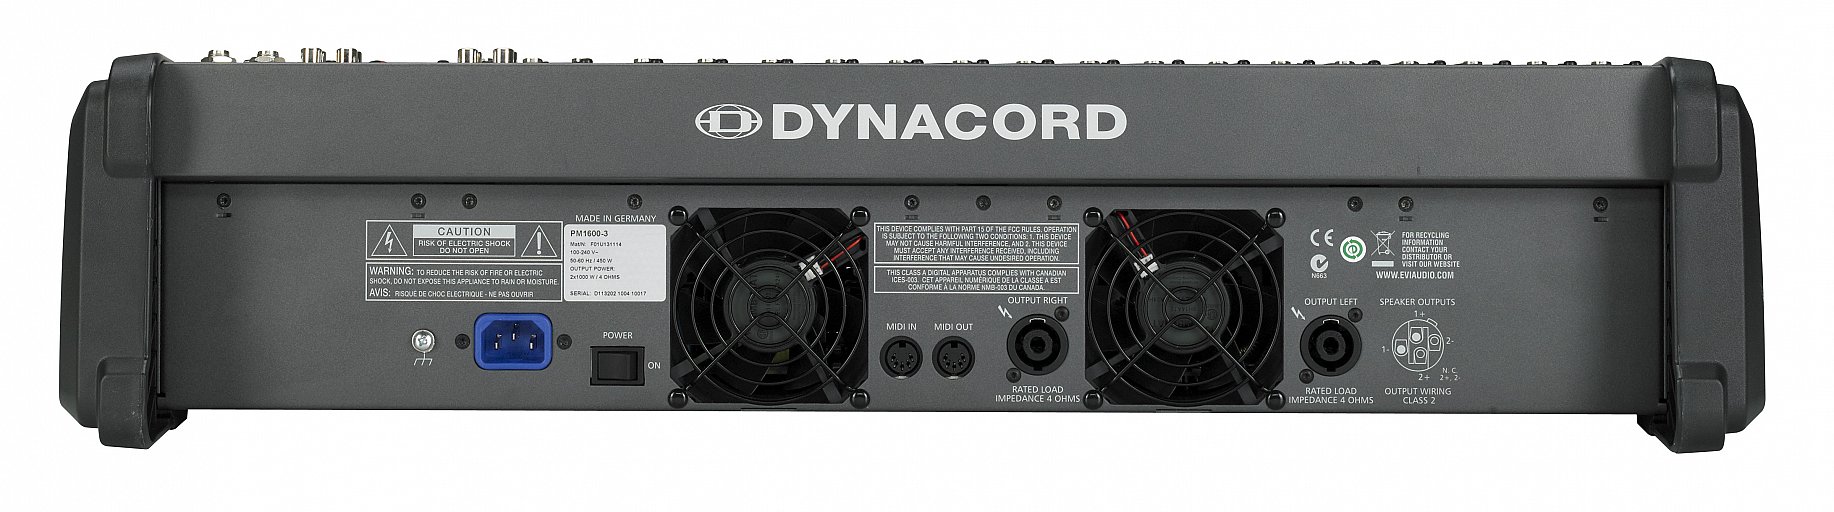 Dynacord PowerMate 1600-3 - Resim 5